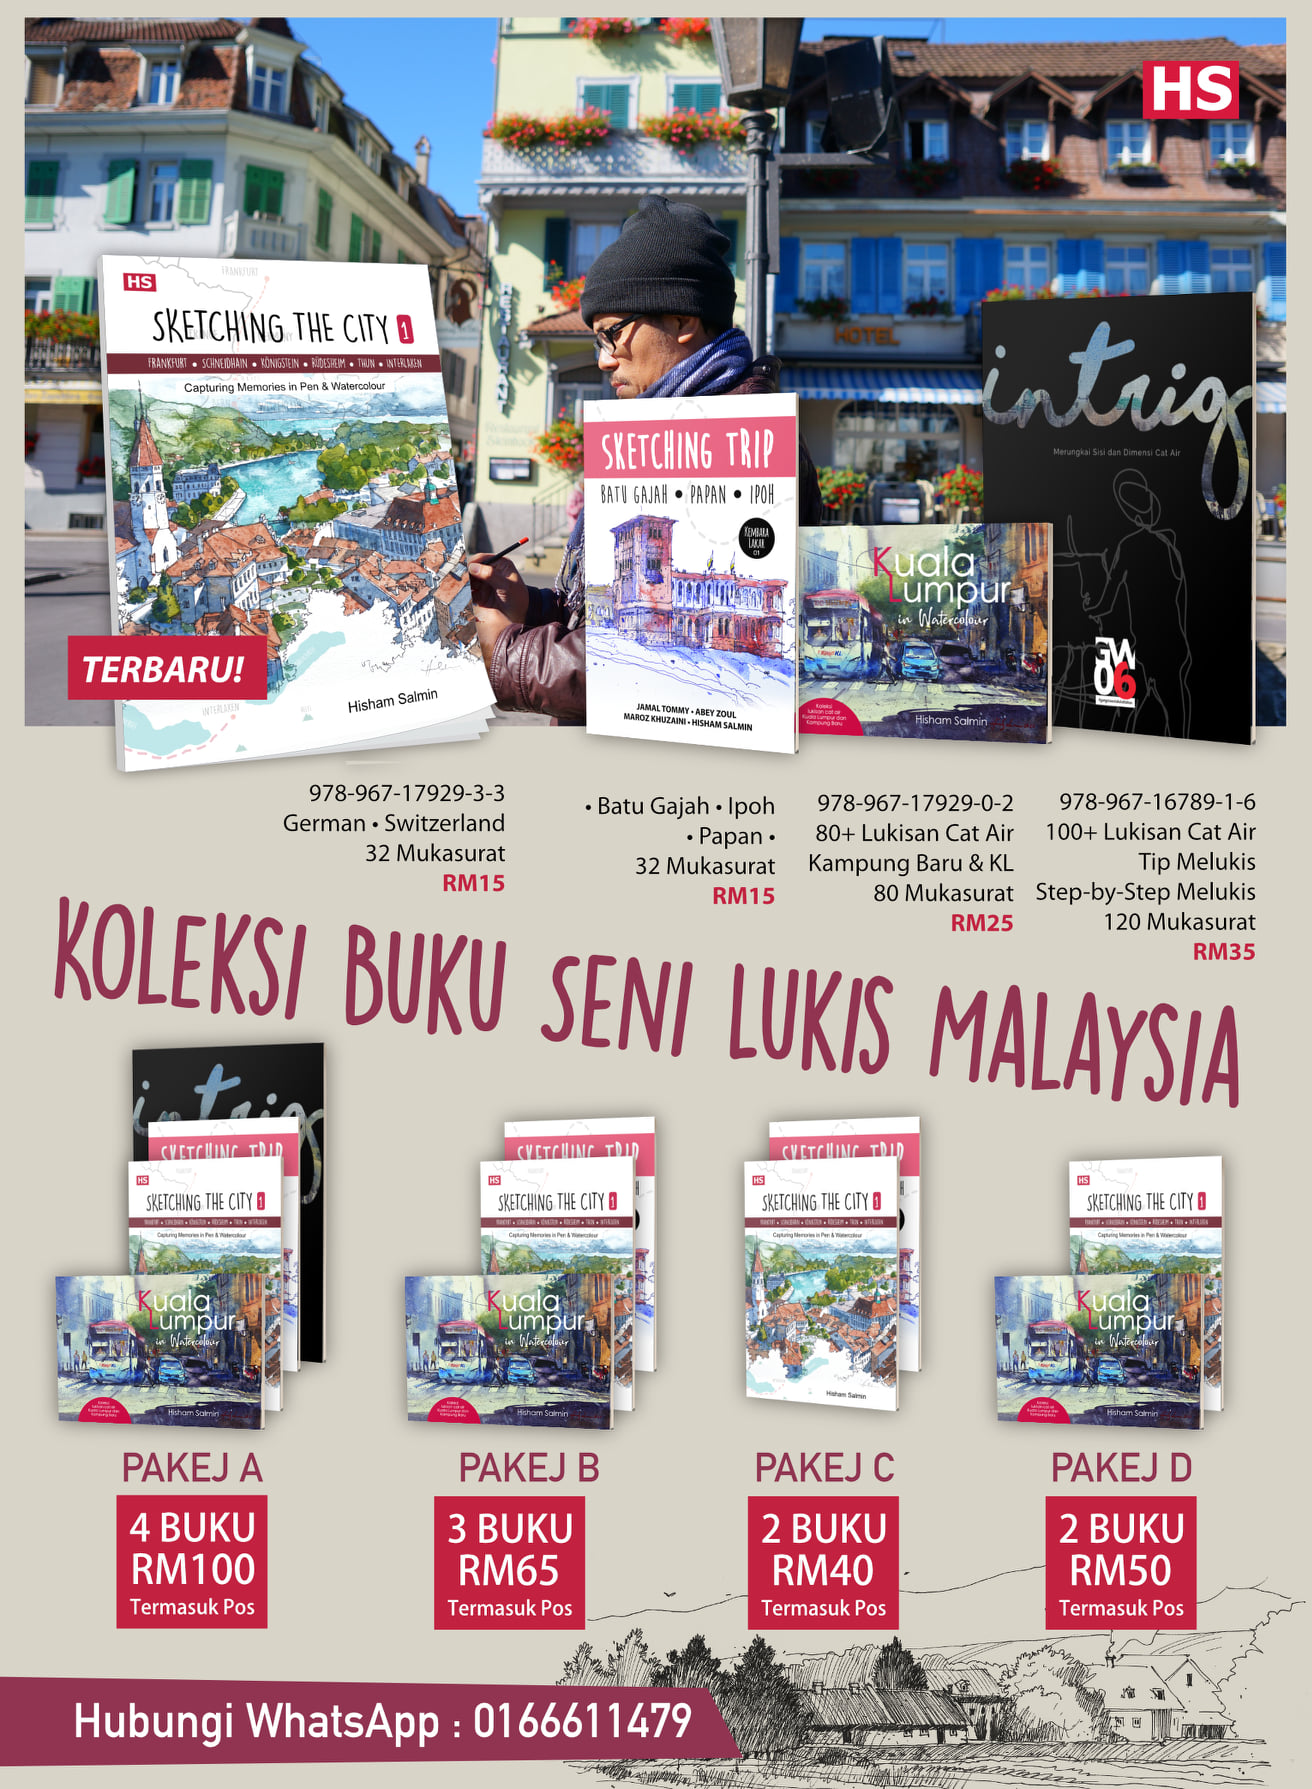 Koleksi Buku Seni Lukis Malaysia